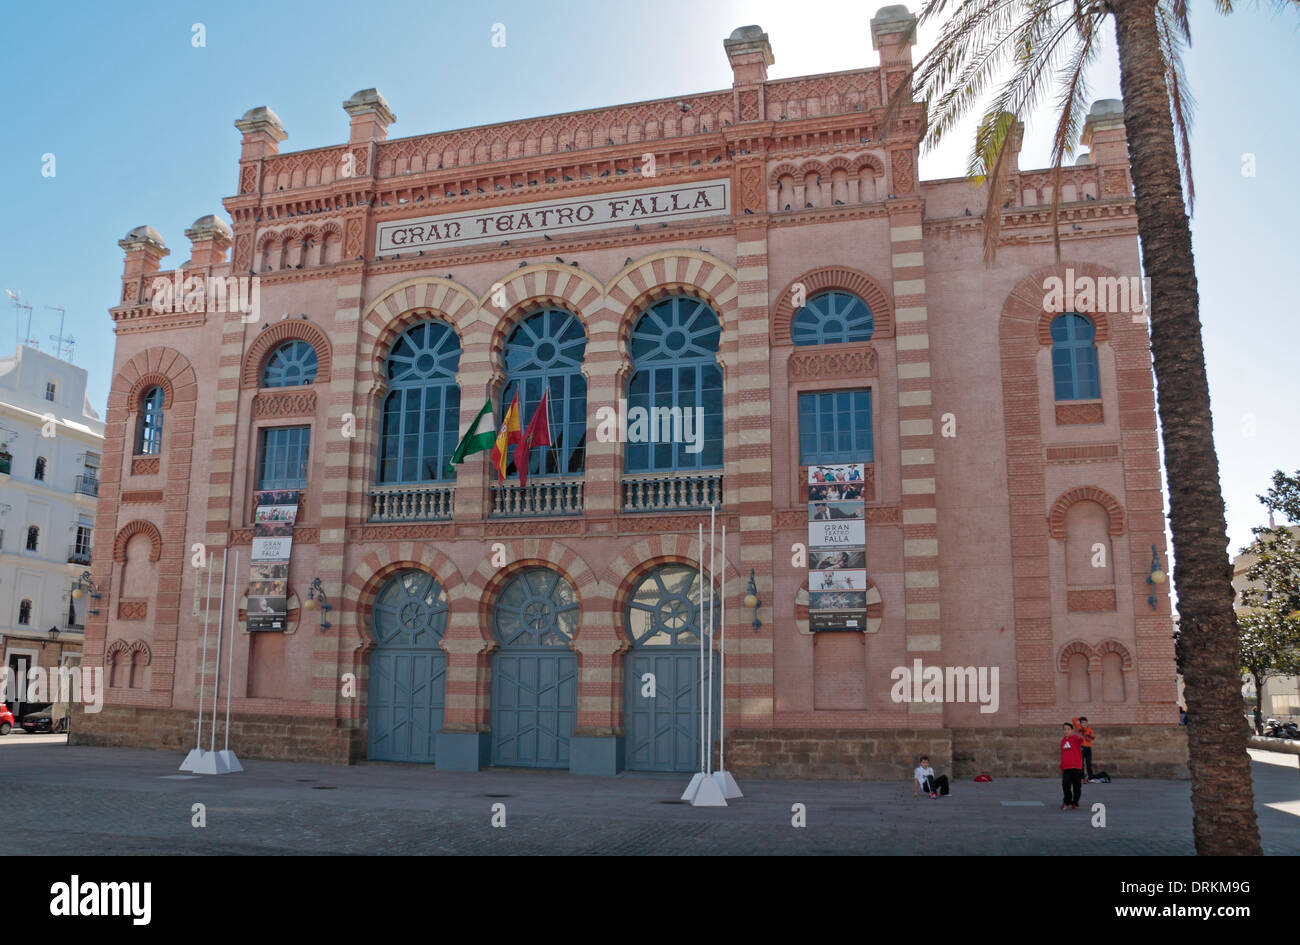 The Gran Teatro Falla in  Plaza Fragela, Cadiz, Andalusia, Spain. Stock Photo